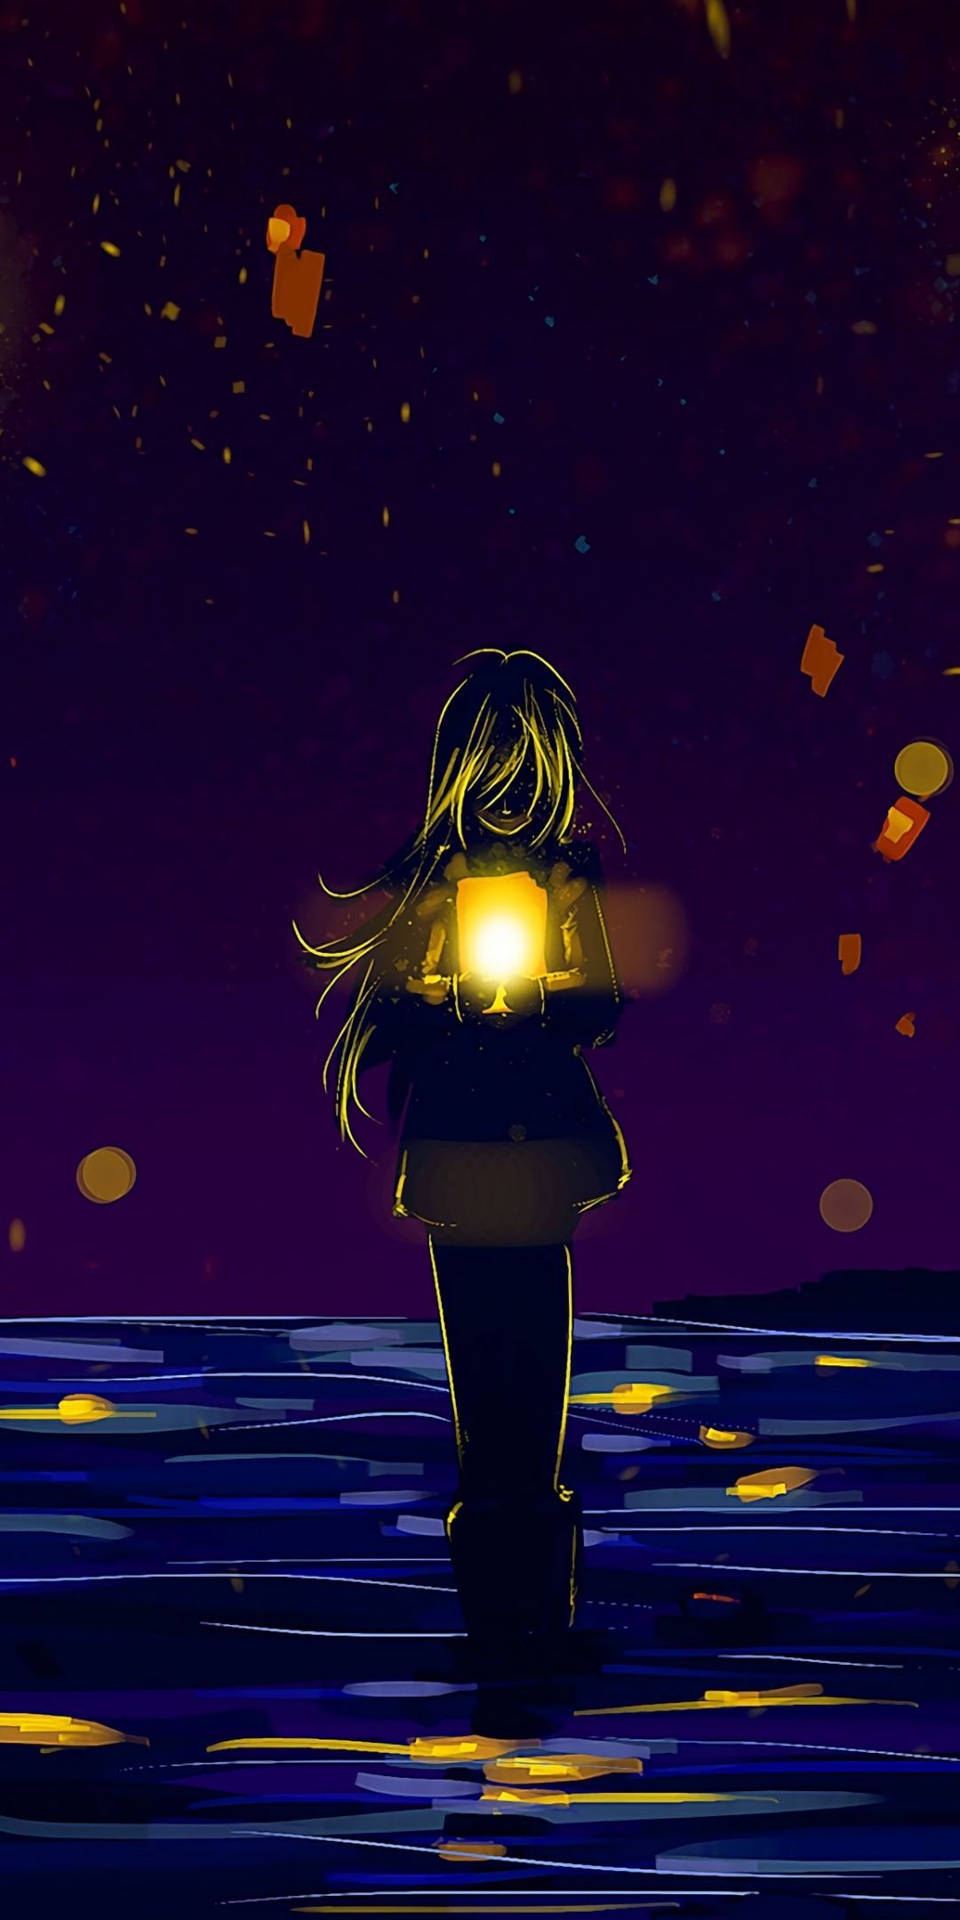 Anime Girl Sad Alone With Lantern Background